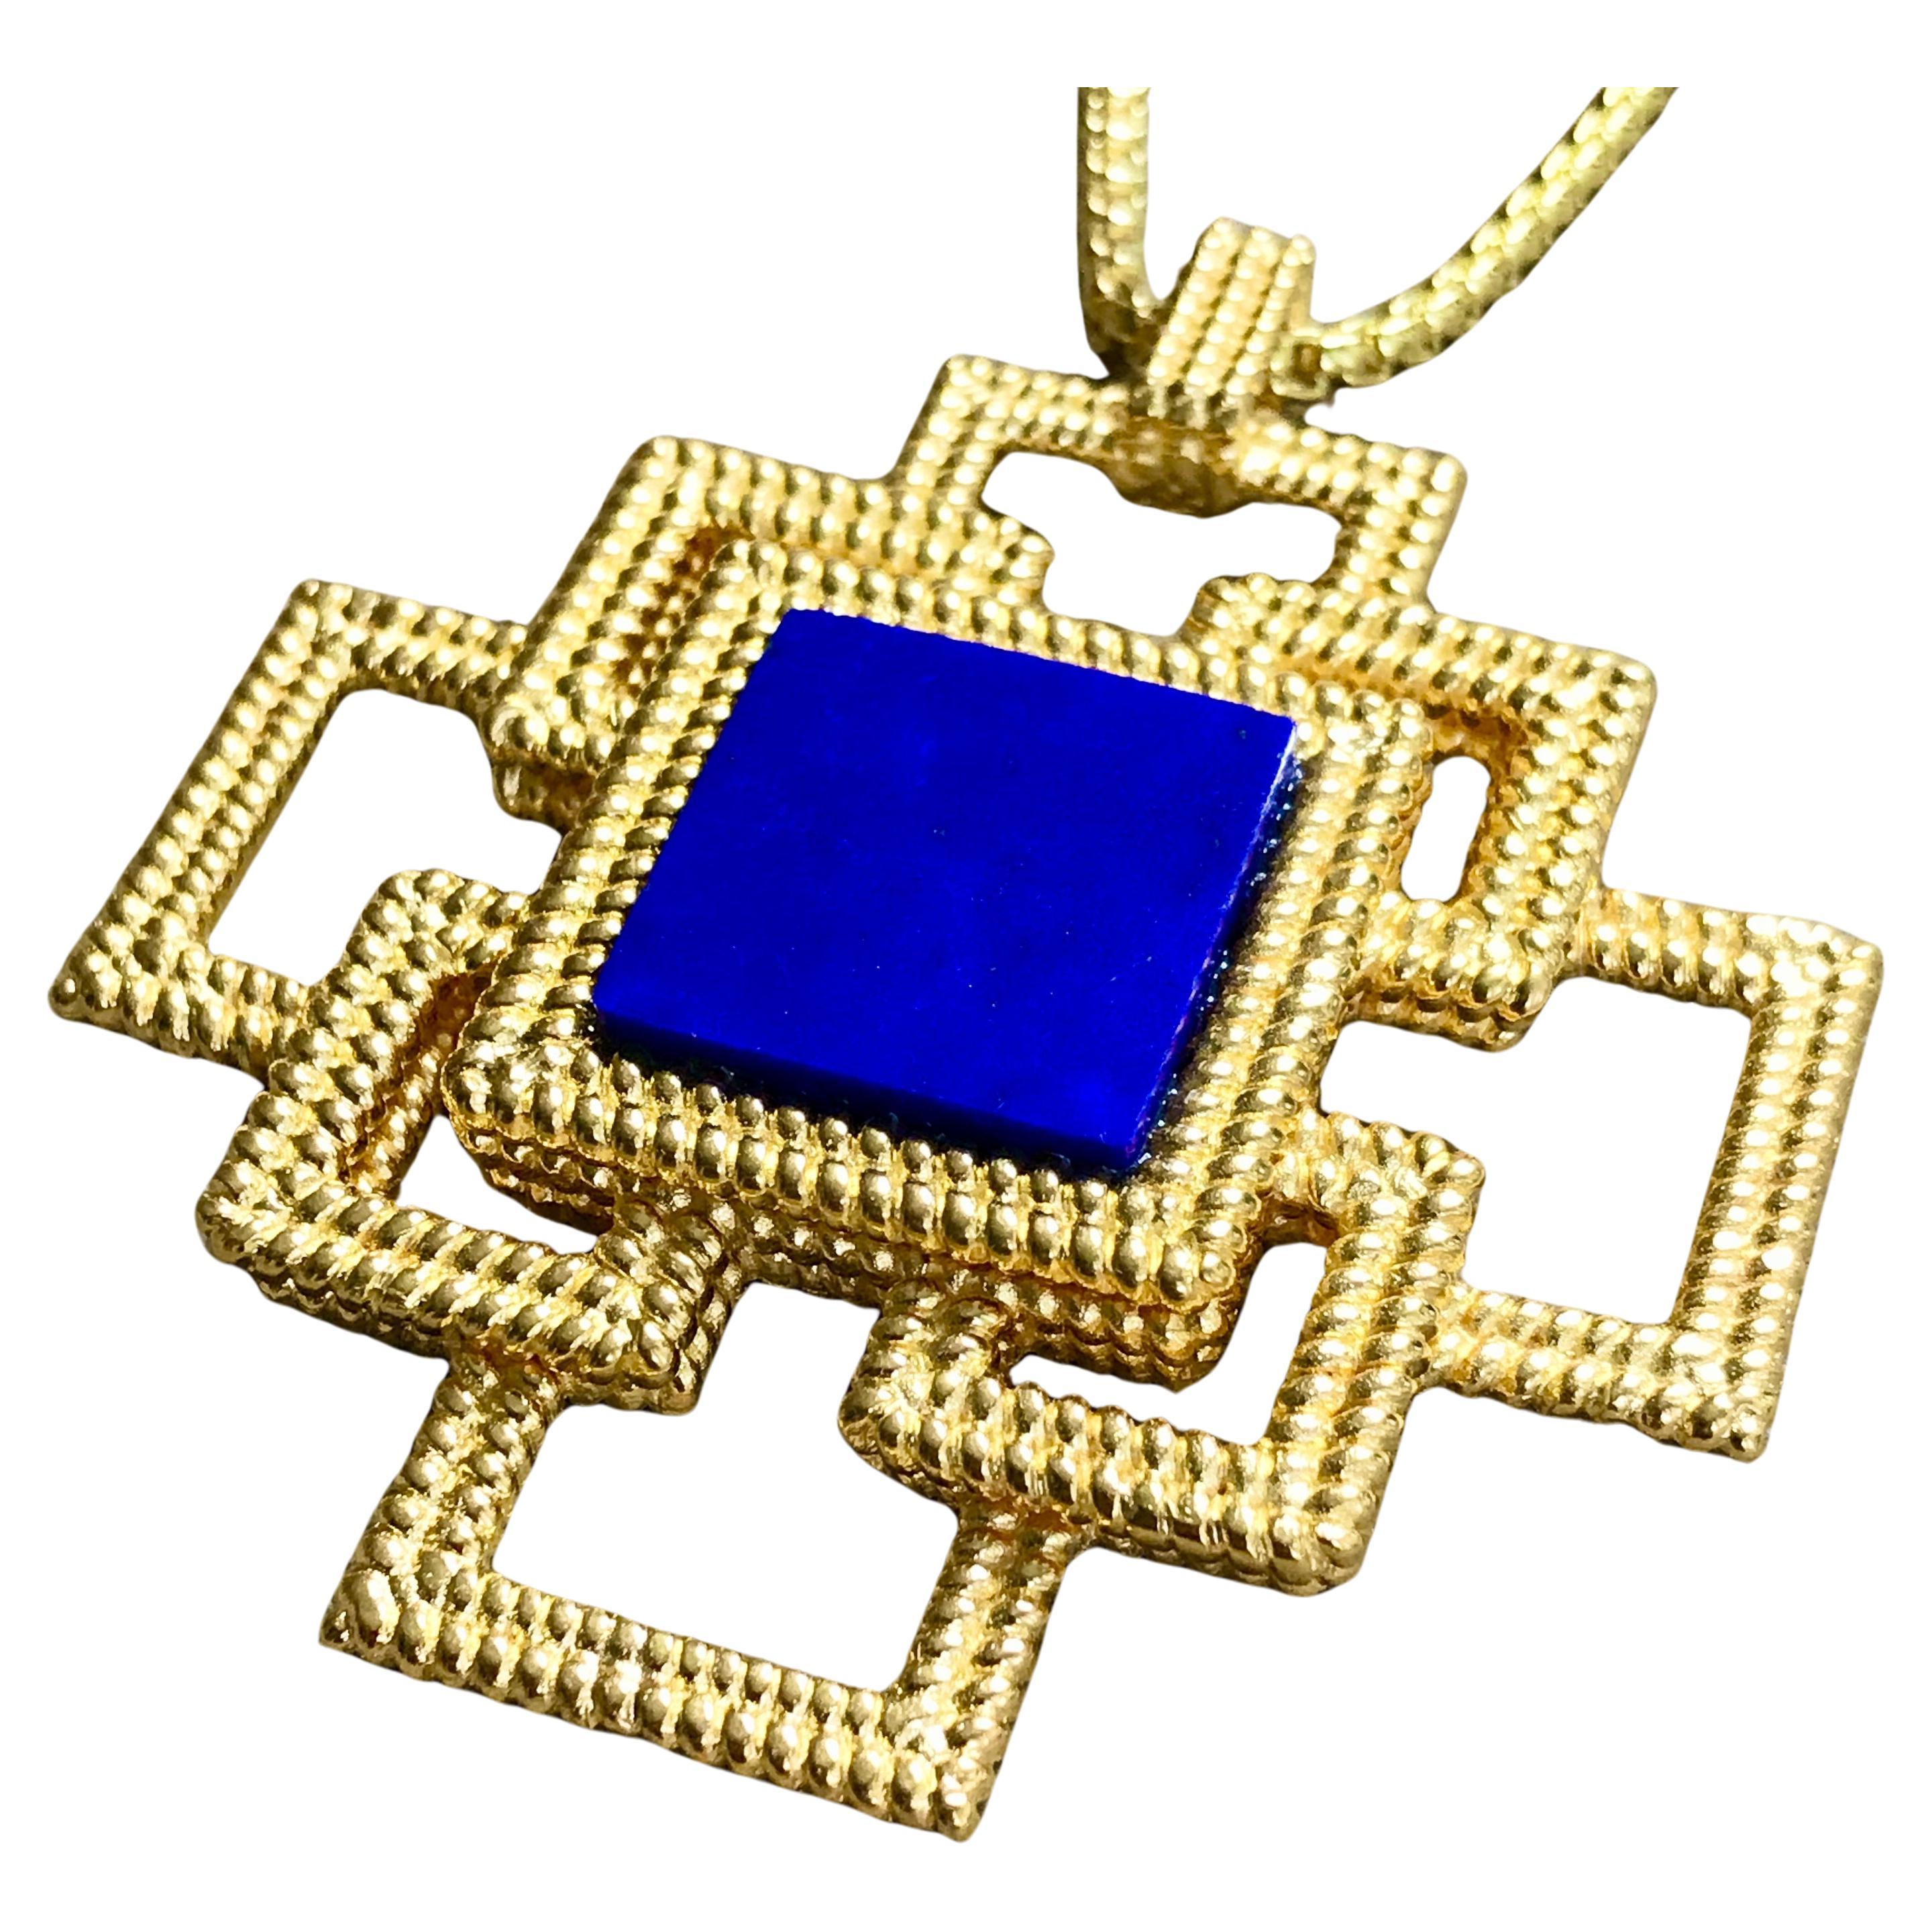 Lapis Lazuli set ropetwist 'stepped squares' pendant